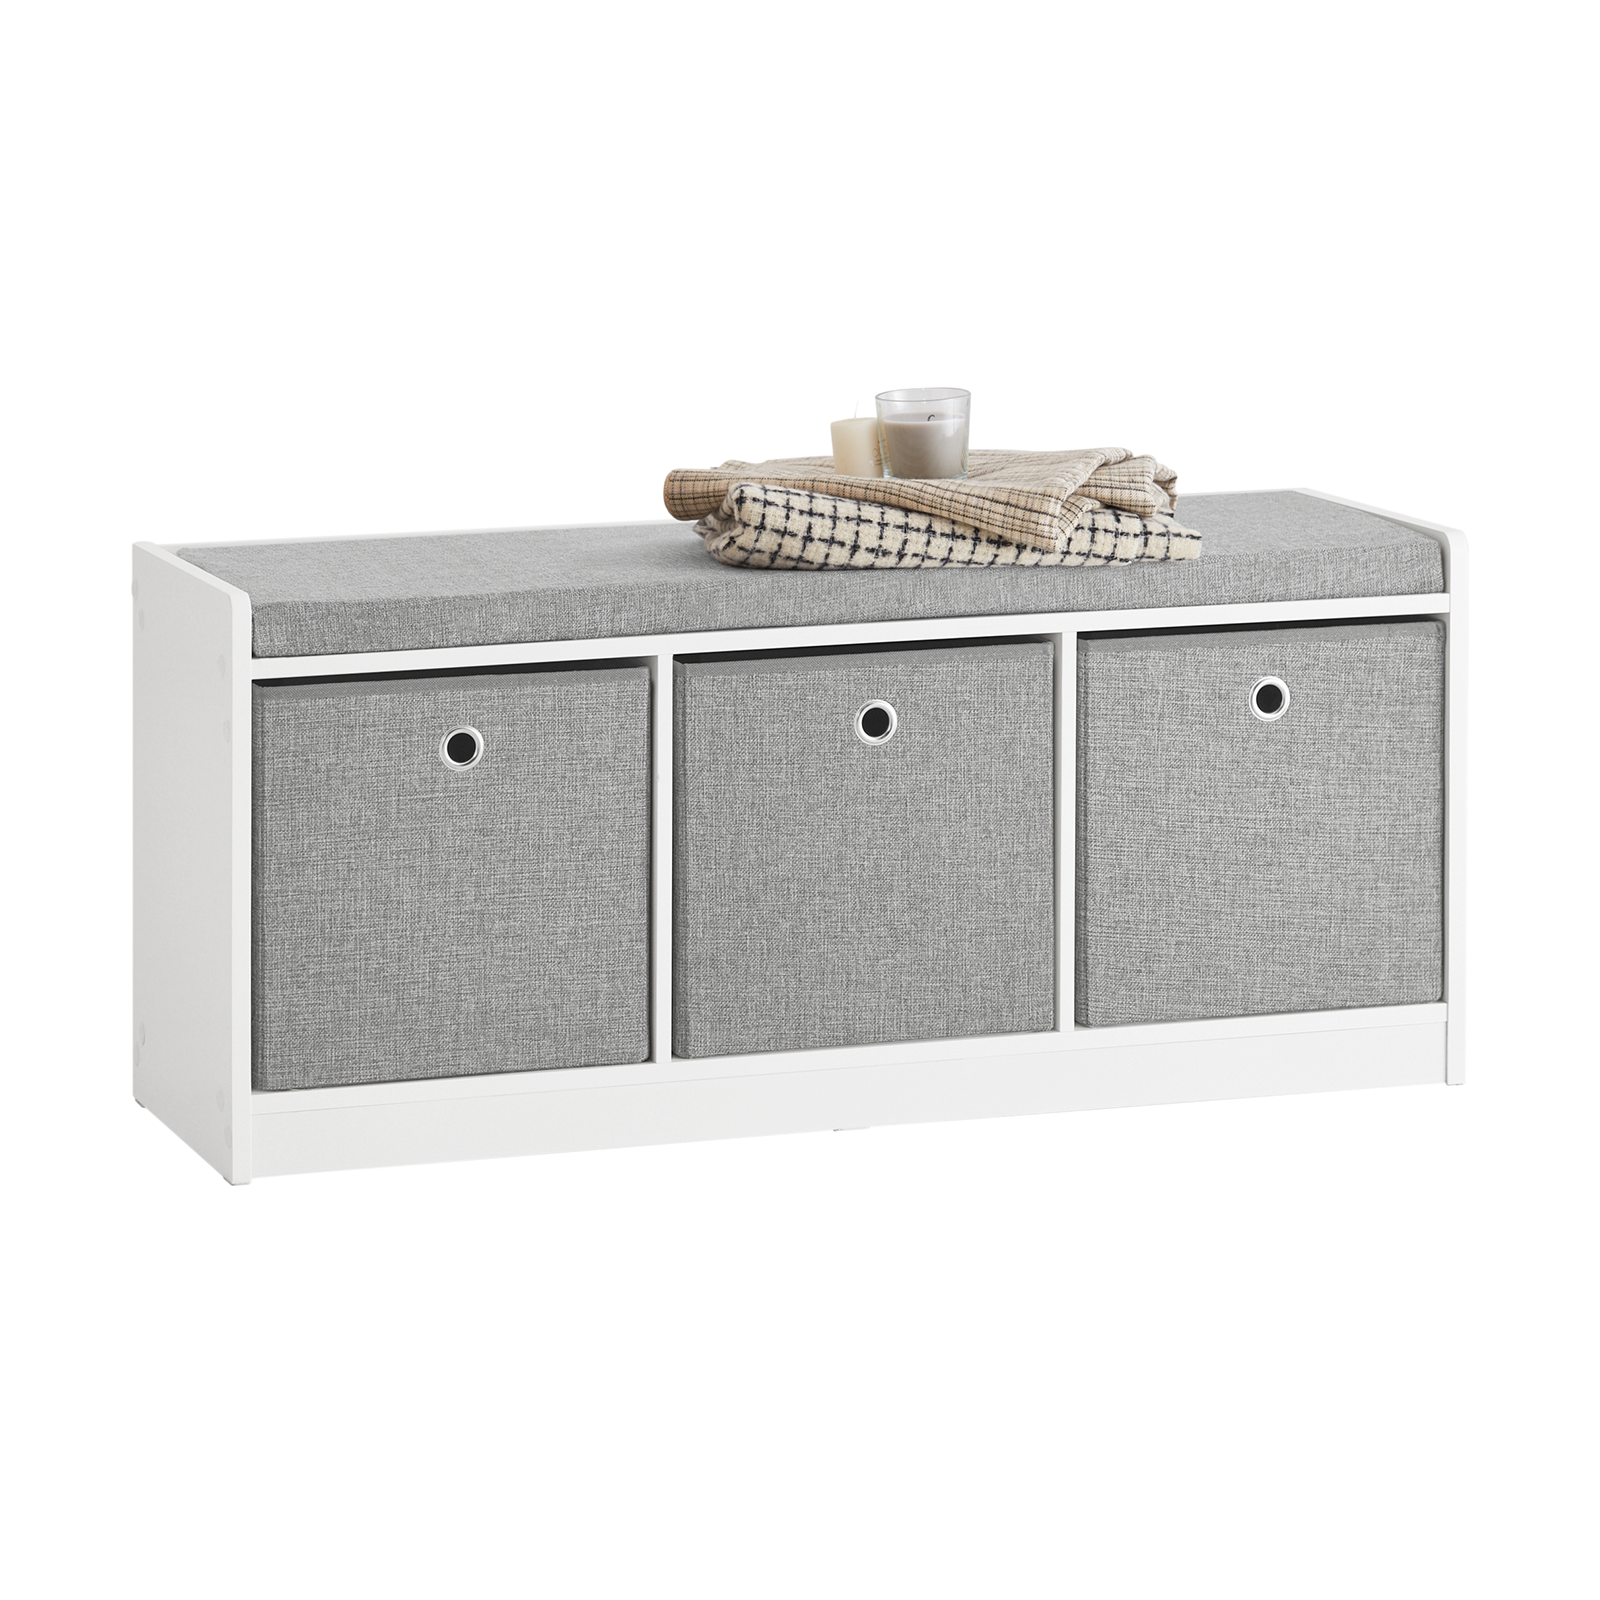 SoBuy FSR65-DG,3 Baskets Hallway Bedroom Storage Bench,Shoe Bench,Shoe Cabinet with Seat Cushion